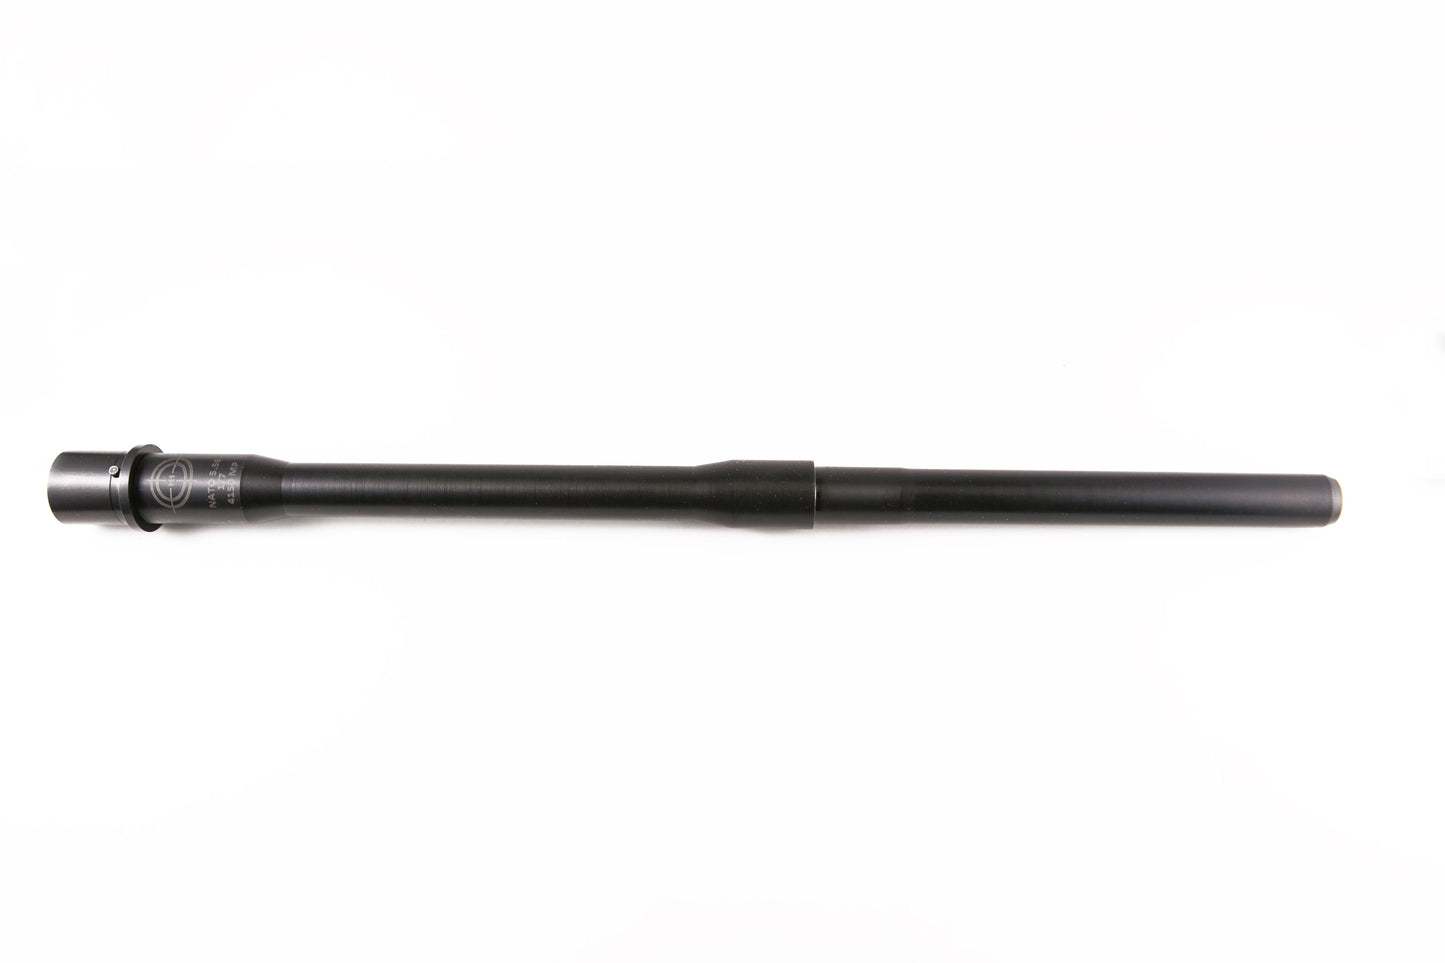 16" 5.56 USGI Profile Mid-length AR 15 Barrel Non Threaded Muzzle